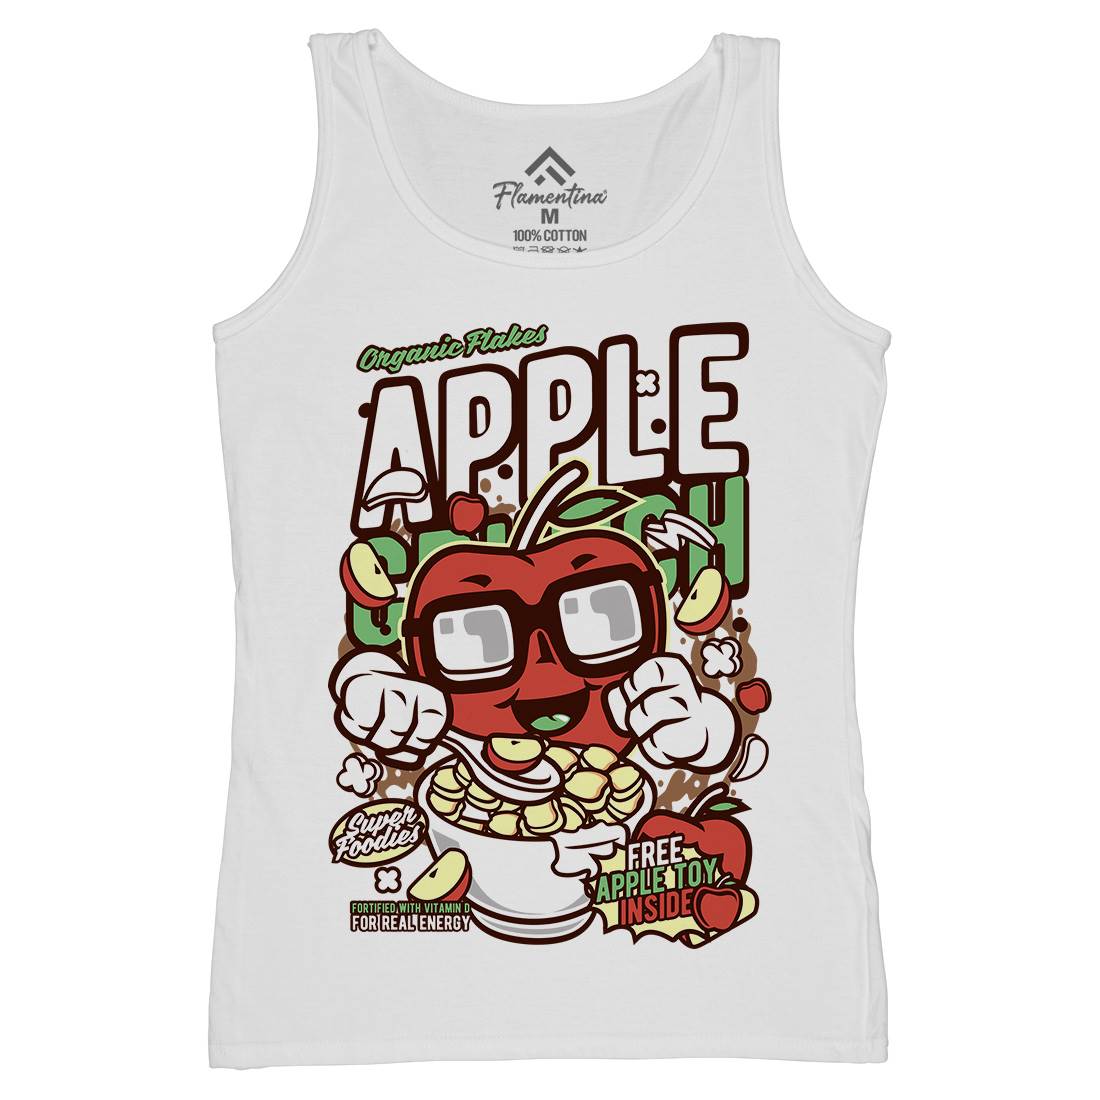 Apple Crunch Womens Organic Tank Top Vest Food C480